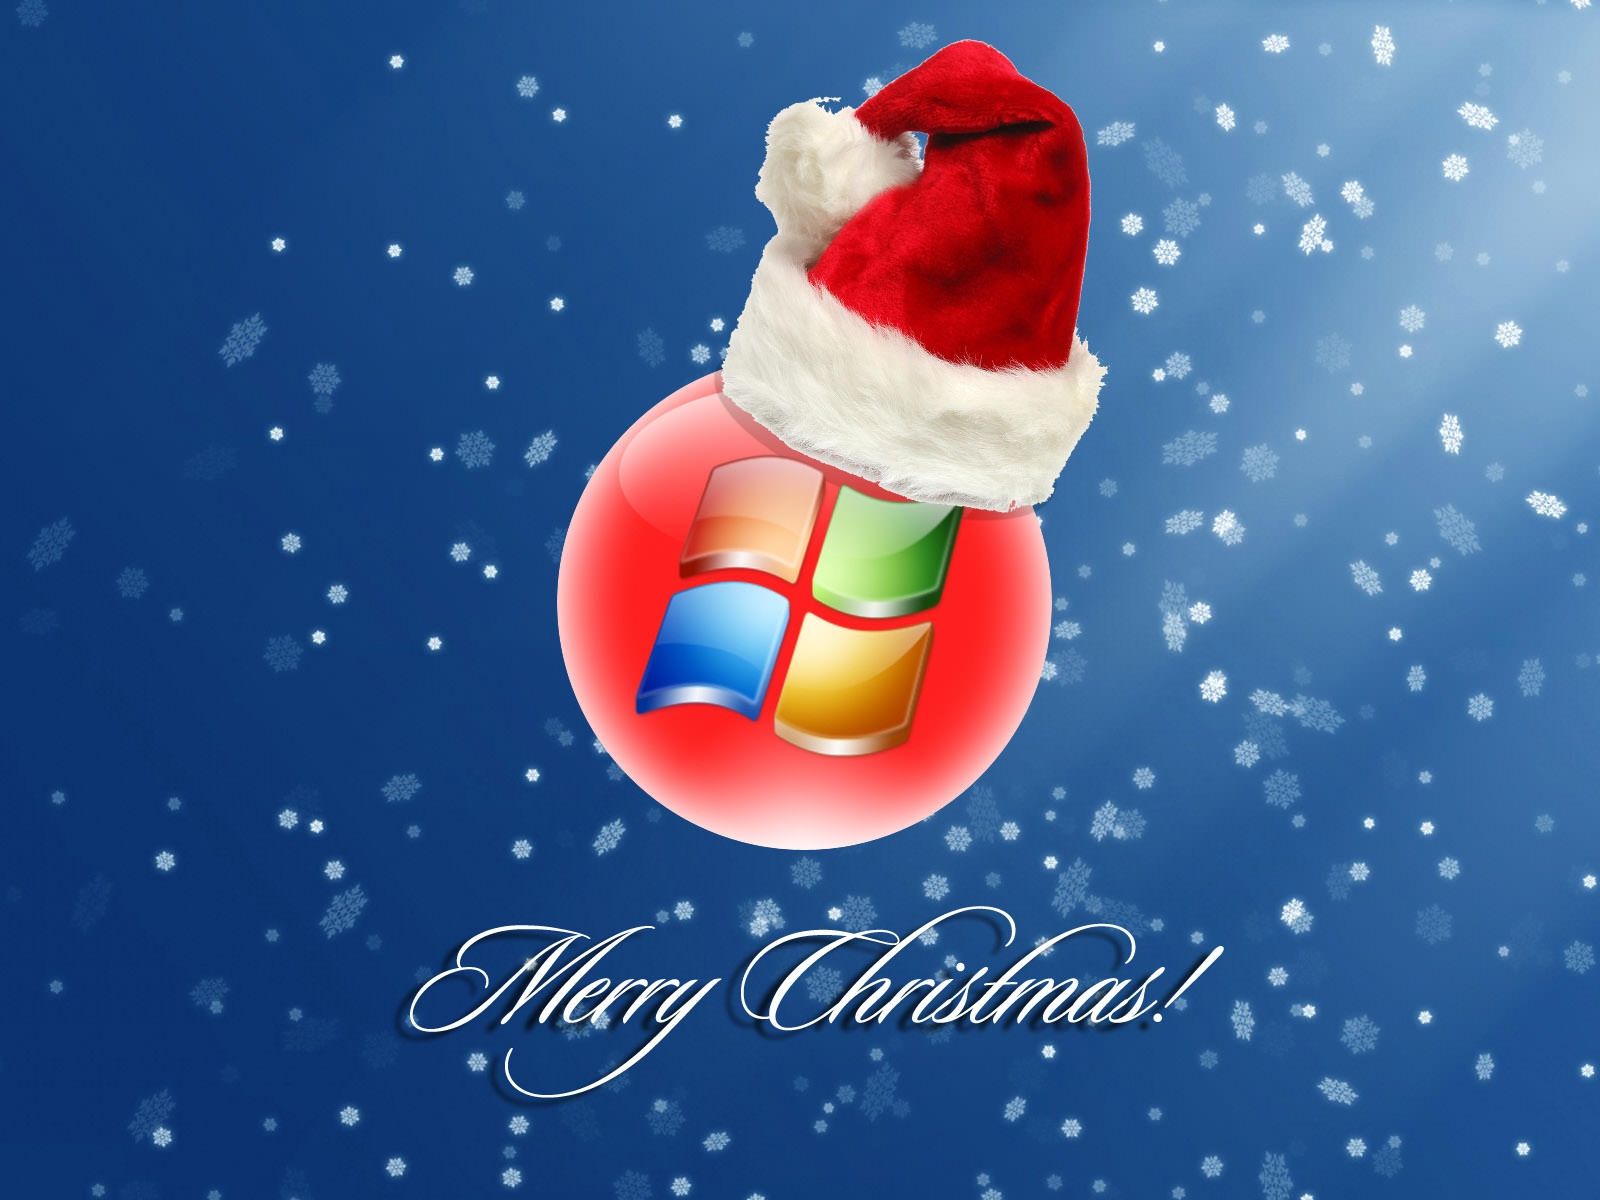 FREE Beautiful HD Christmas Desktop Wallpaper in PSD